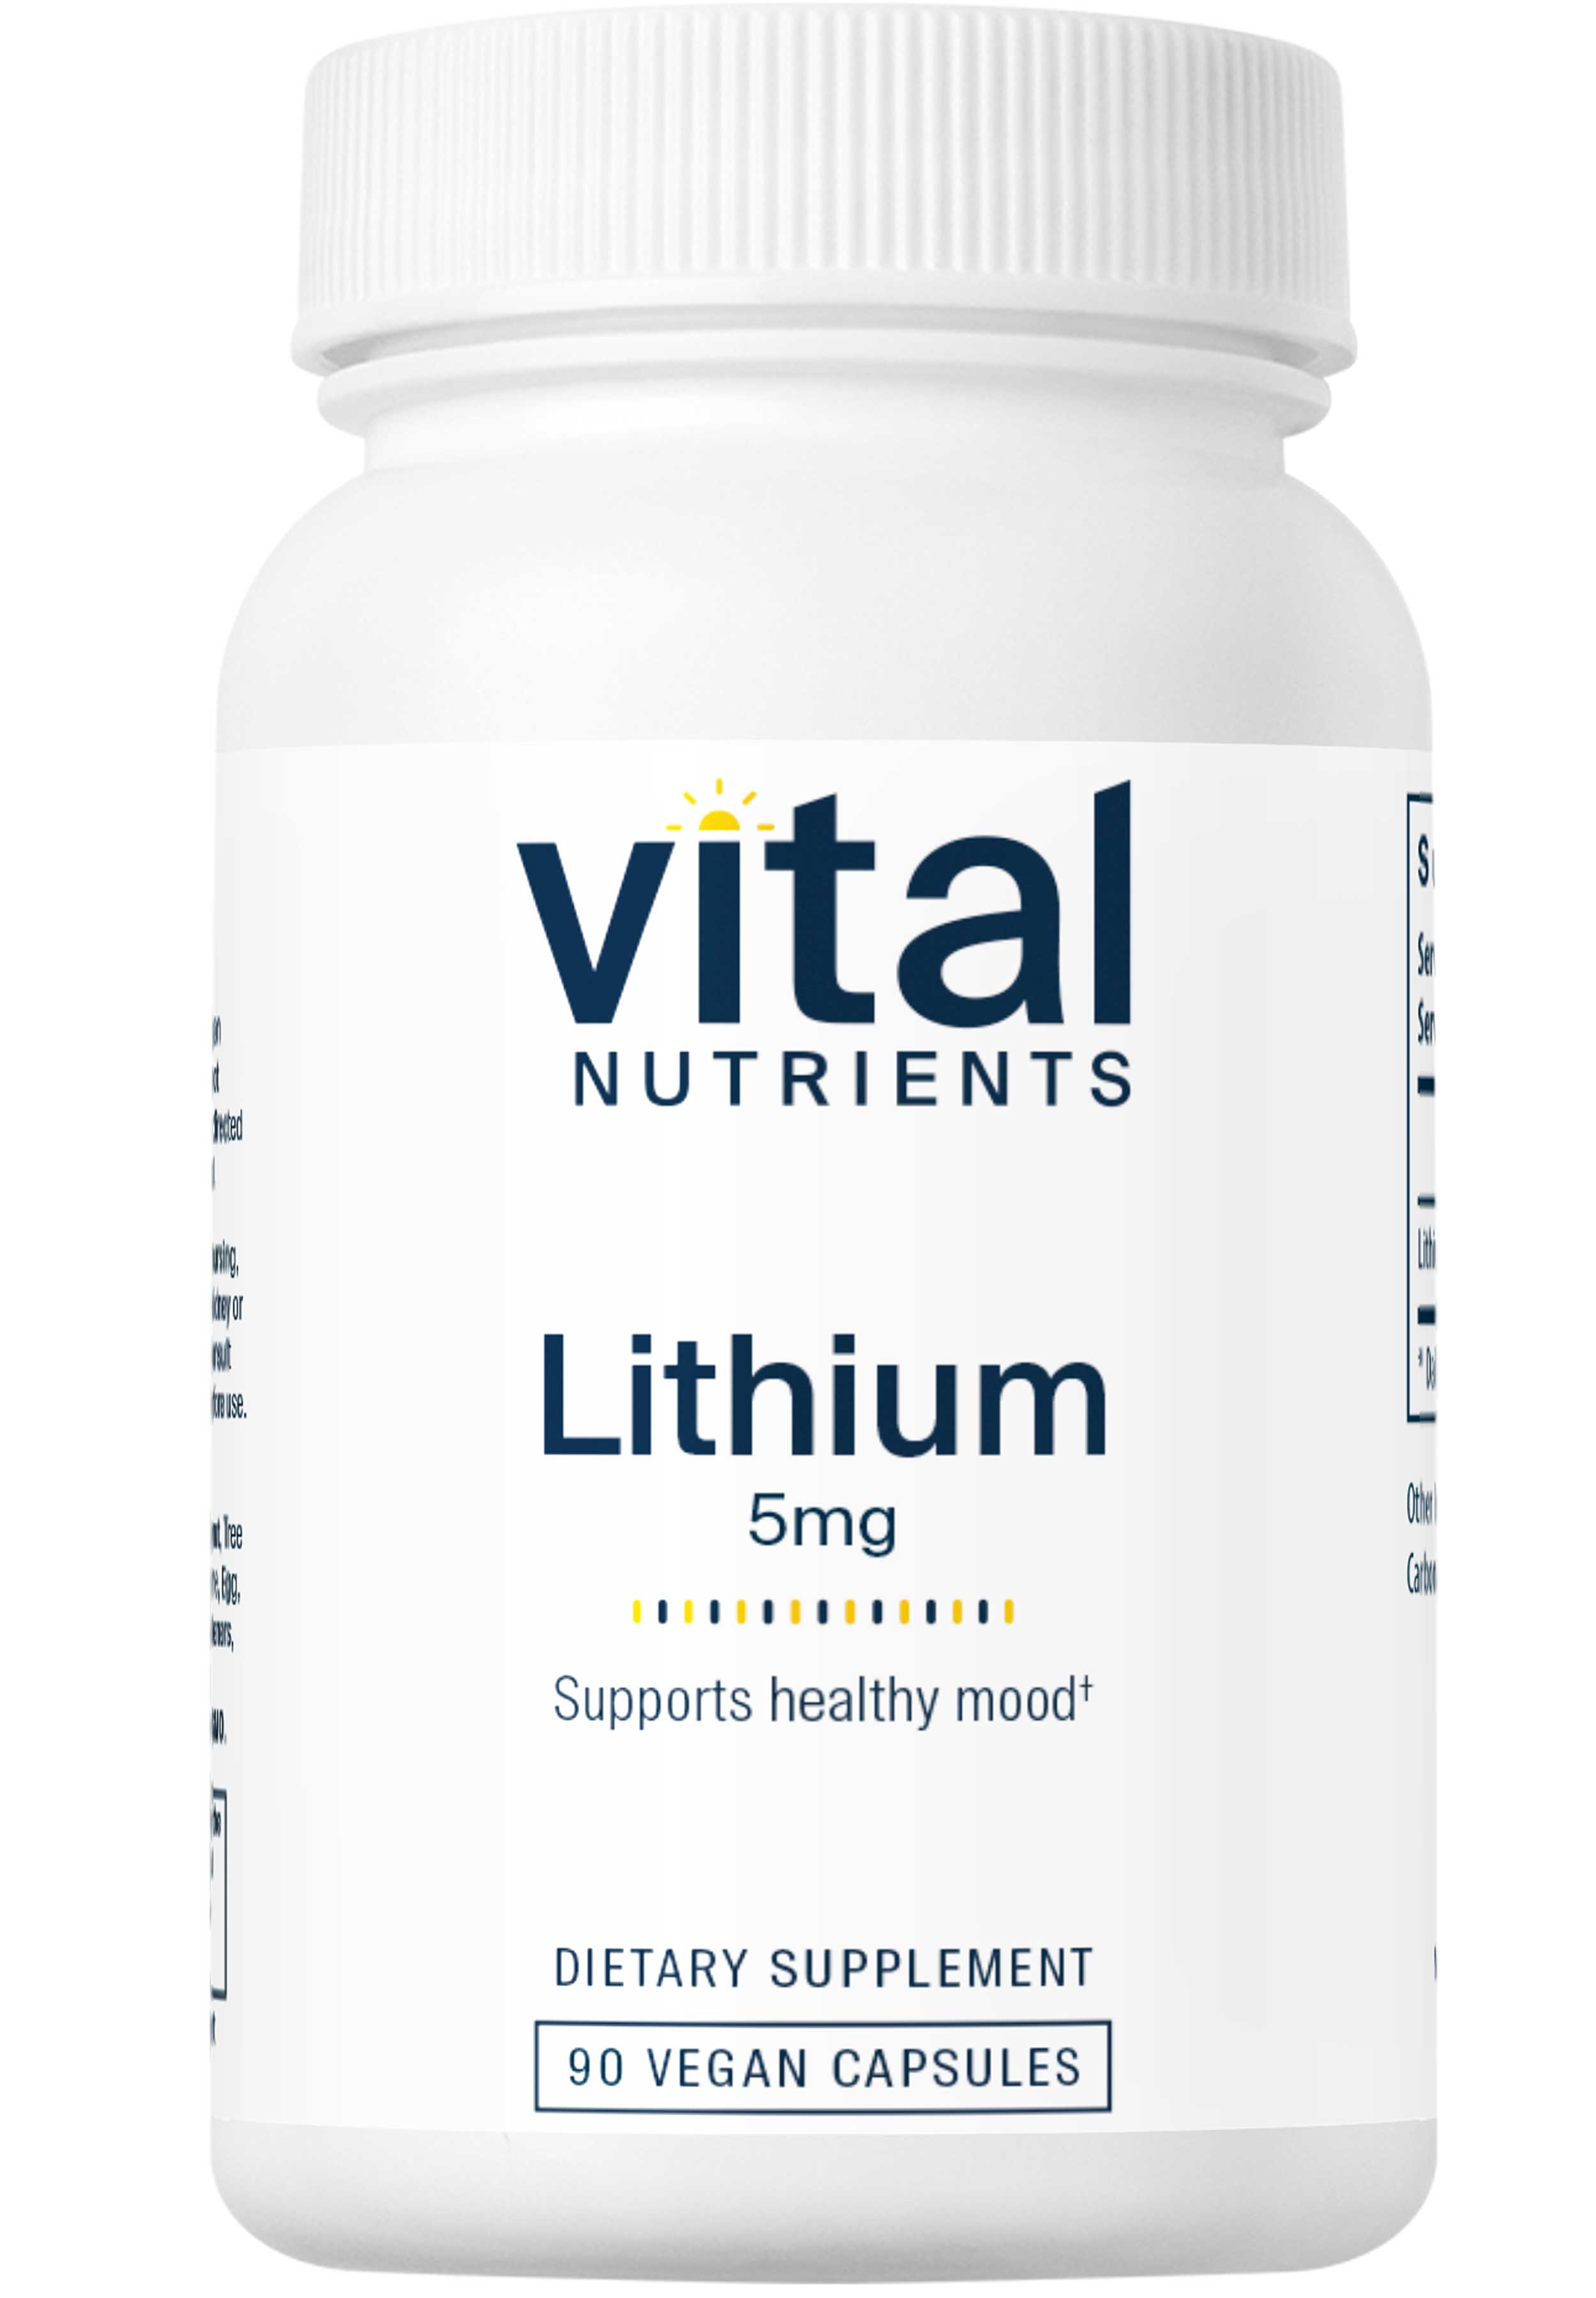 Vital Nutrients Lithium (orotate) 5mg